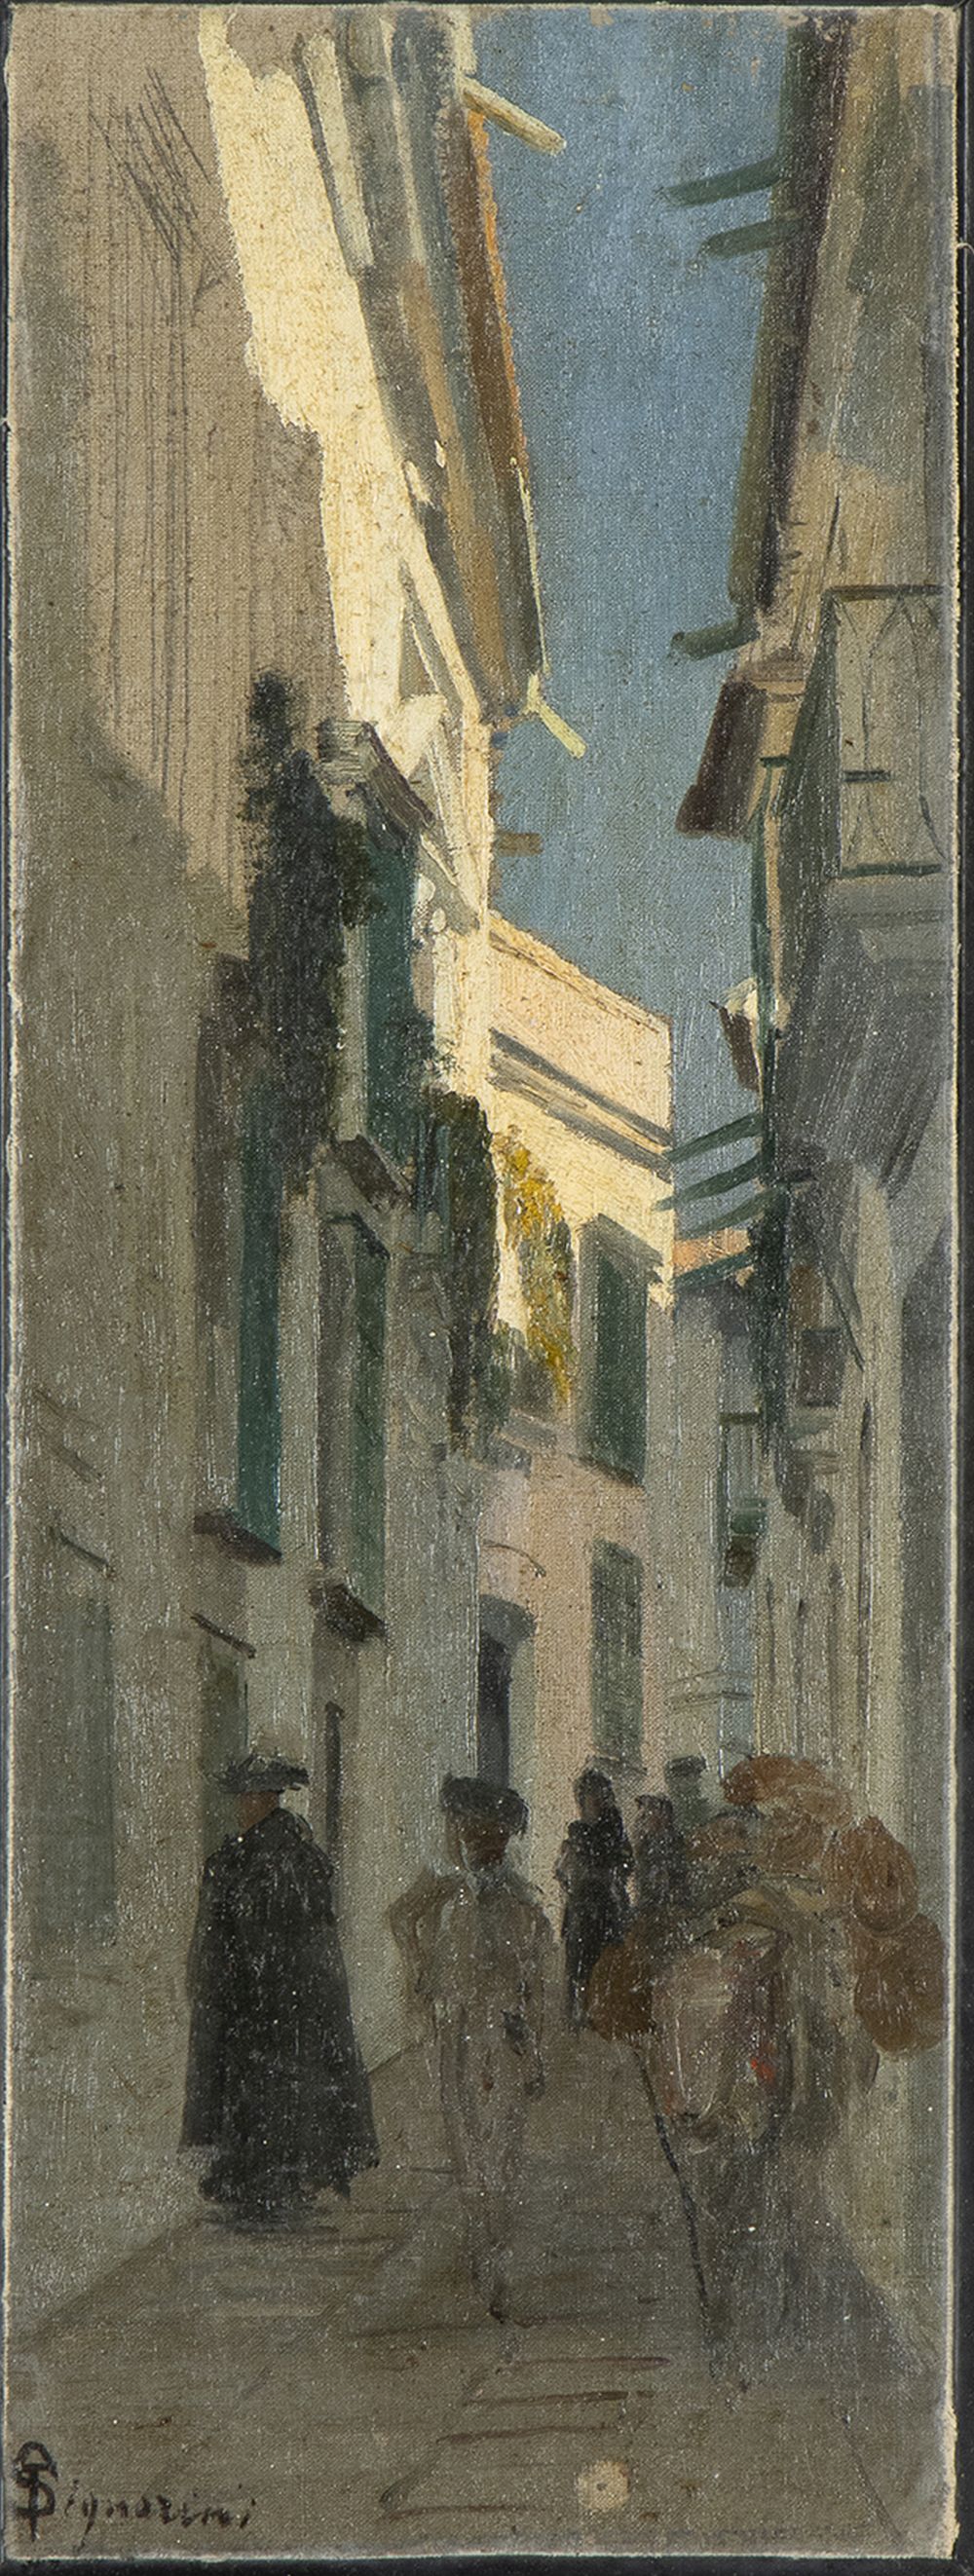 TELEMACO SIGNORINI (Florence, 1835 – 1901): Village alley